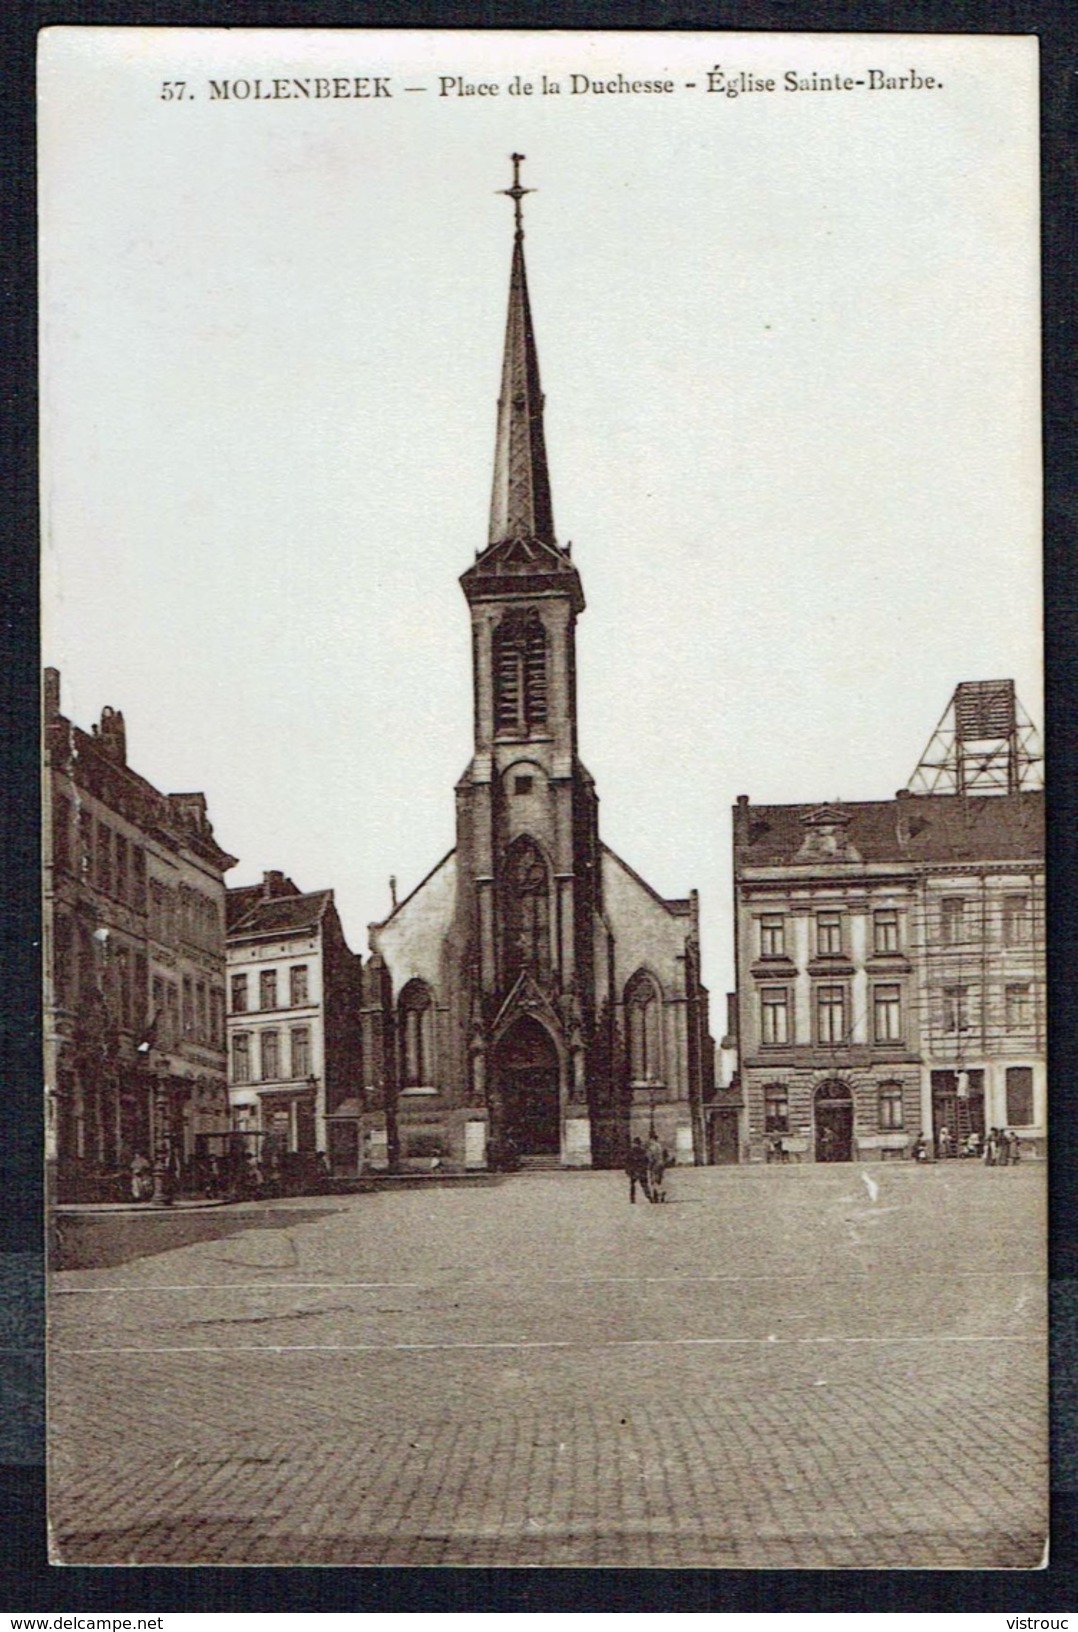 MOLENBEEK - Place De La Duchesse - Eglise Sainte-Barbe - Circulé - Circulated - Gelaufen. - Molenbeek-St-Jean - St-Jans-Molenbeek